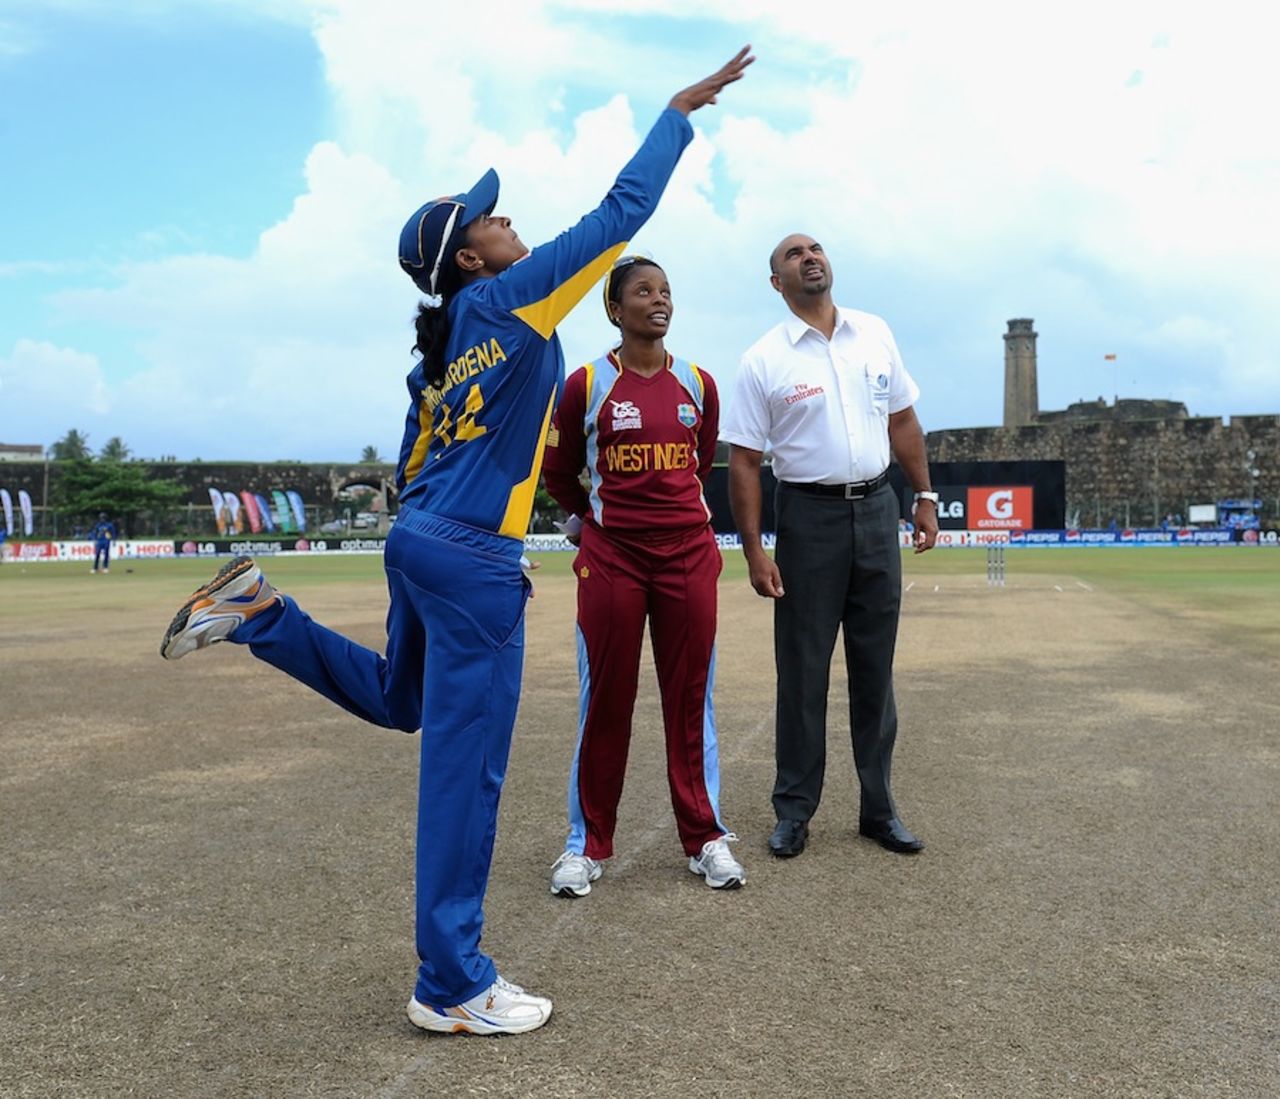 Dilani Manodara and Merissa Aguilleira at the toss, Sri Lanka v West Indies, Women's World T20, Group B, Galle, September 28, 2012